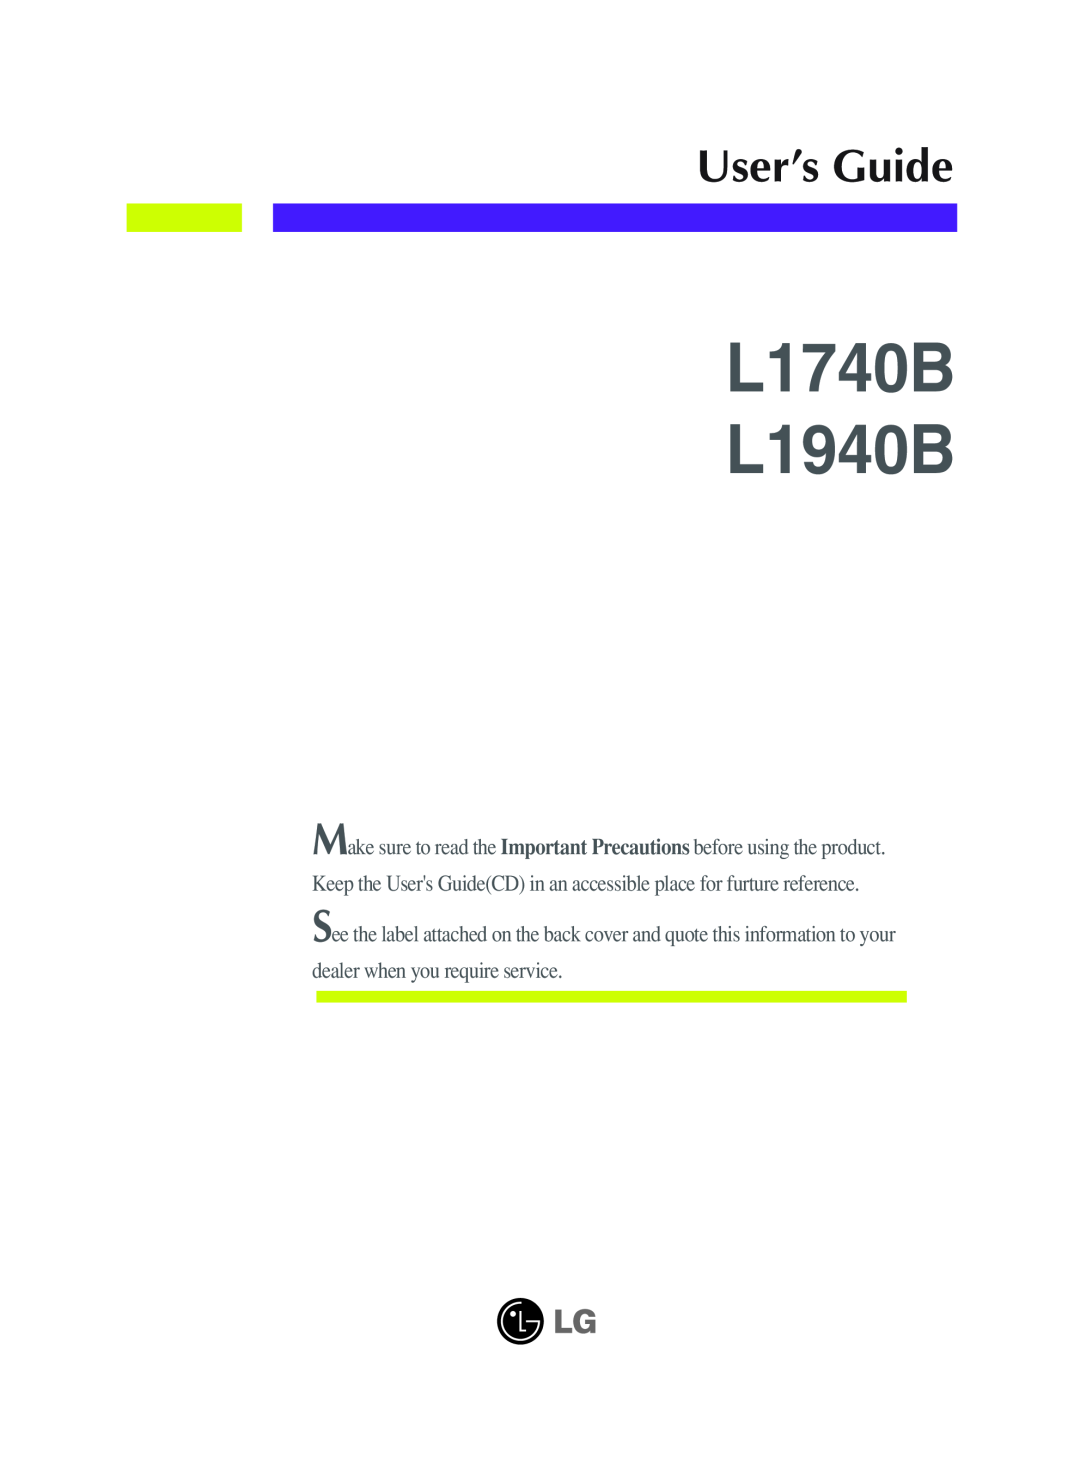 LG Electronics manual L1740B L1940B, User’s Guide 